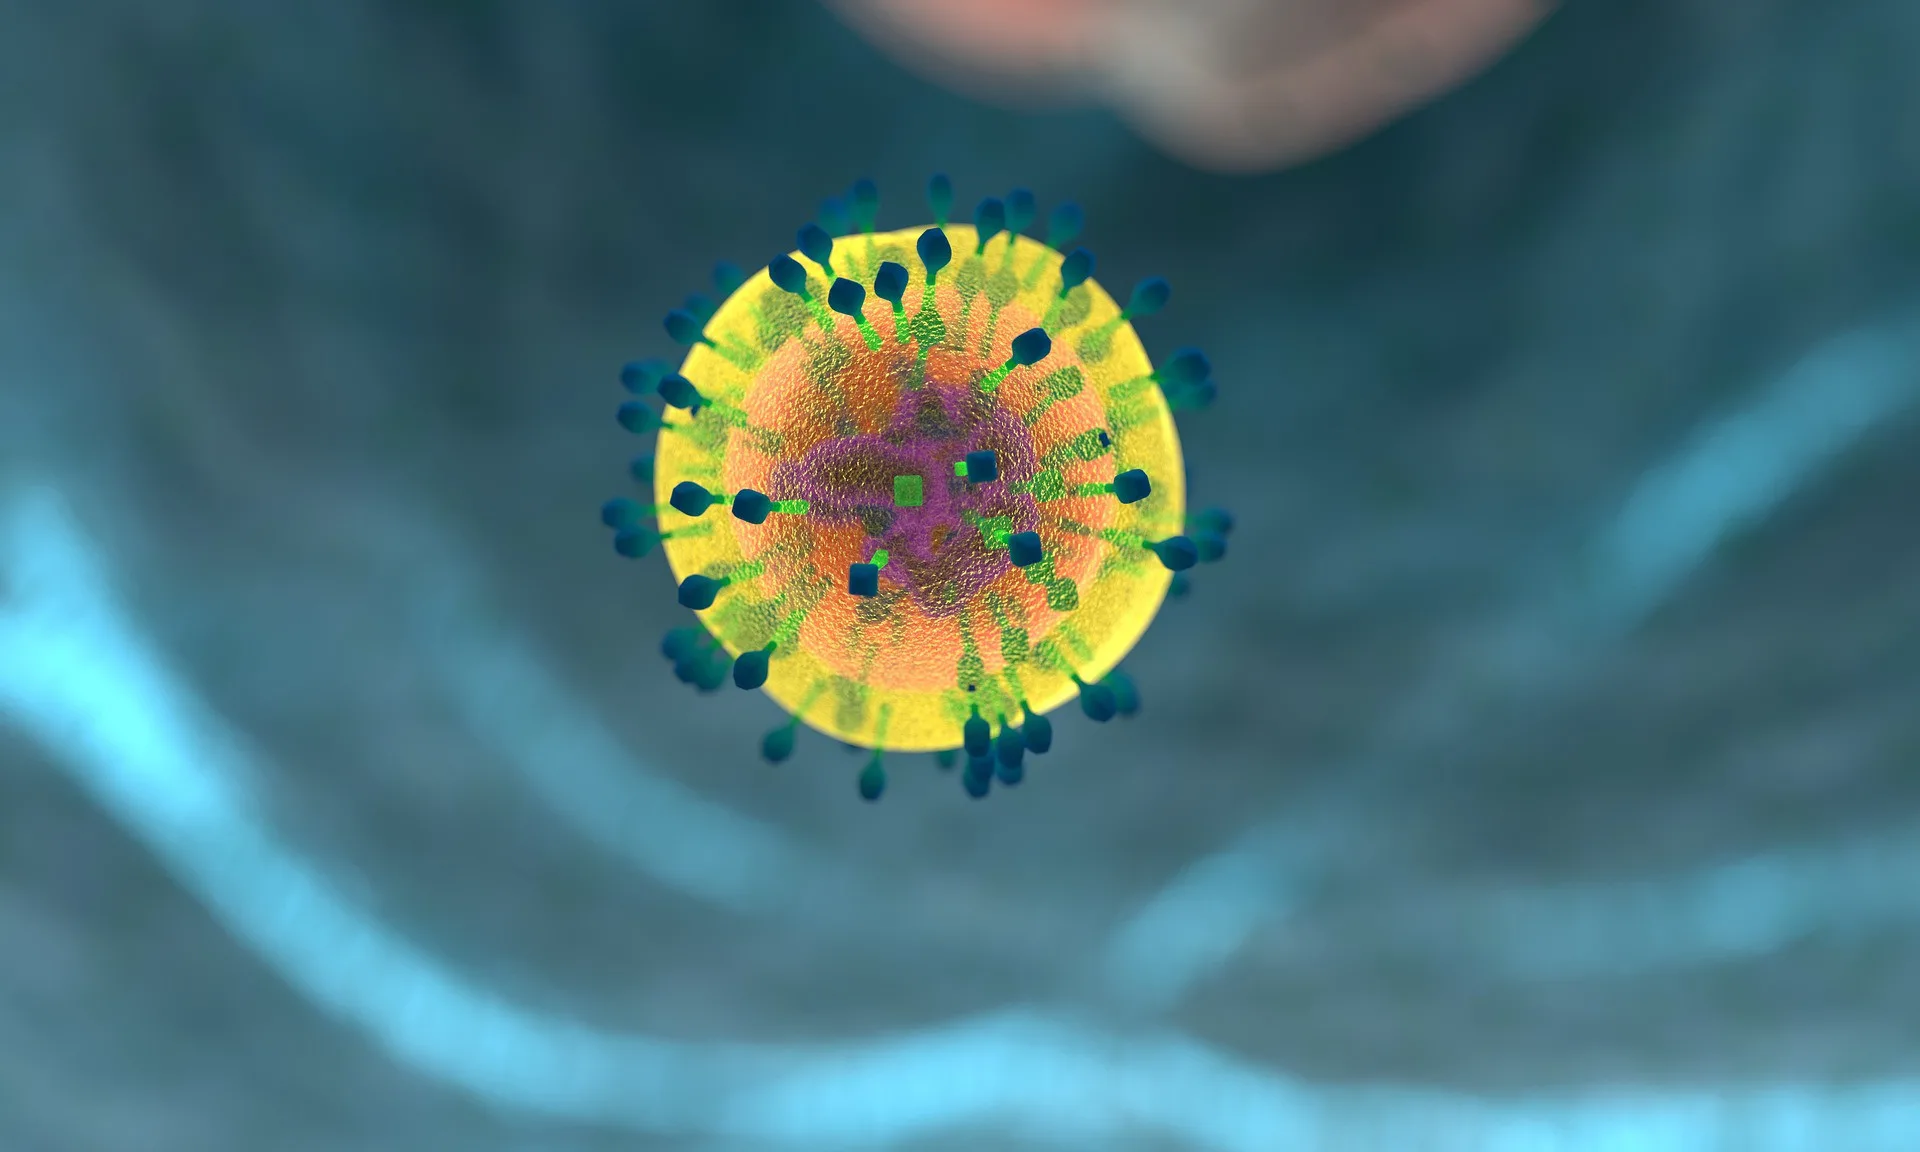 imunitny system bunky rakovina bojovat vedci svedsko preprogramovat jpg